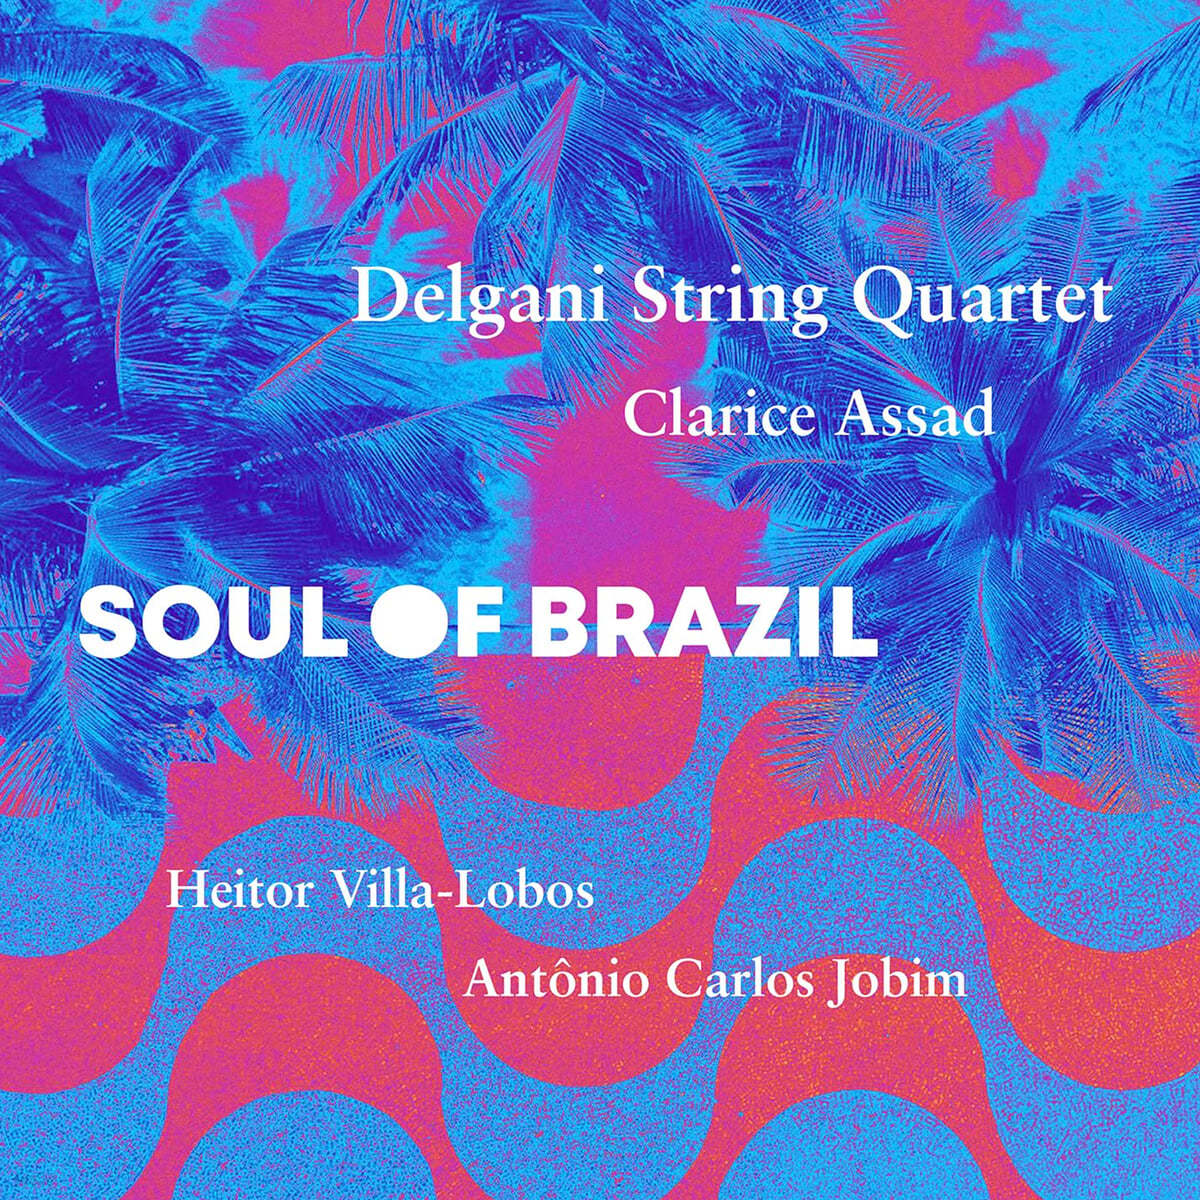 Delgani String Quartet / Clarice Assad 브라질의 영혼 - 조빙, 아사드, 빌라-로부스의 작품들 (Soul of Brazil - Jobim, Assad, Villa-Lobos)